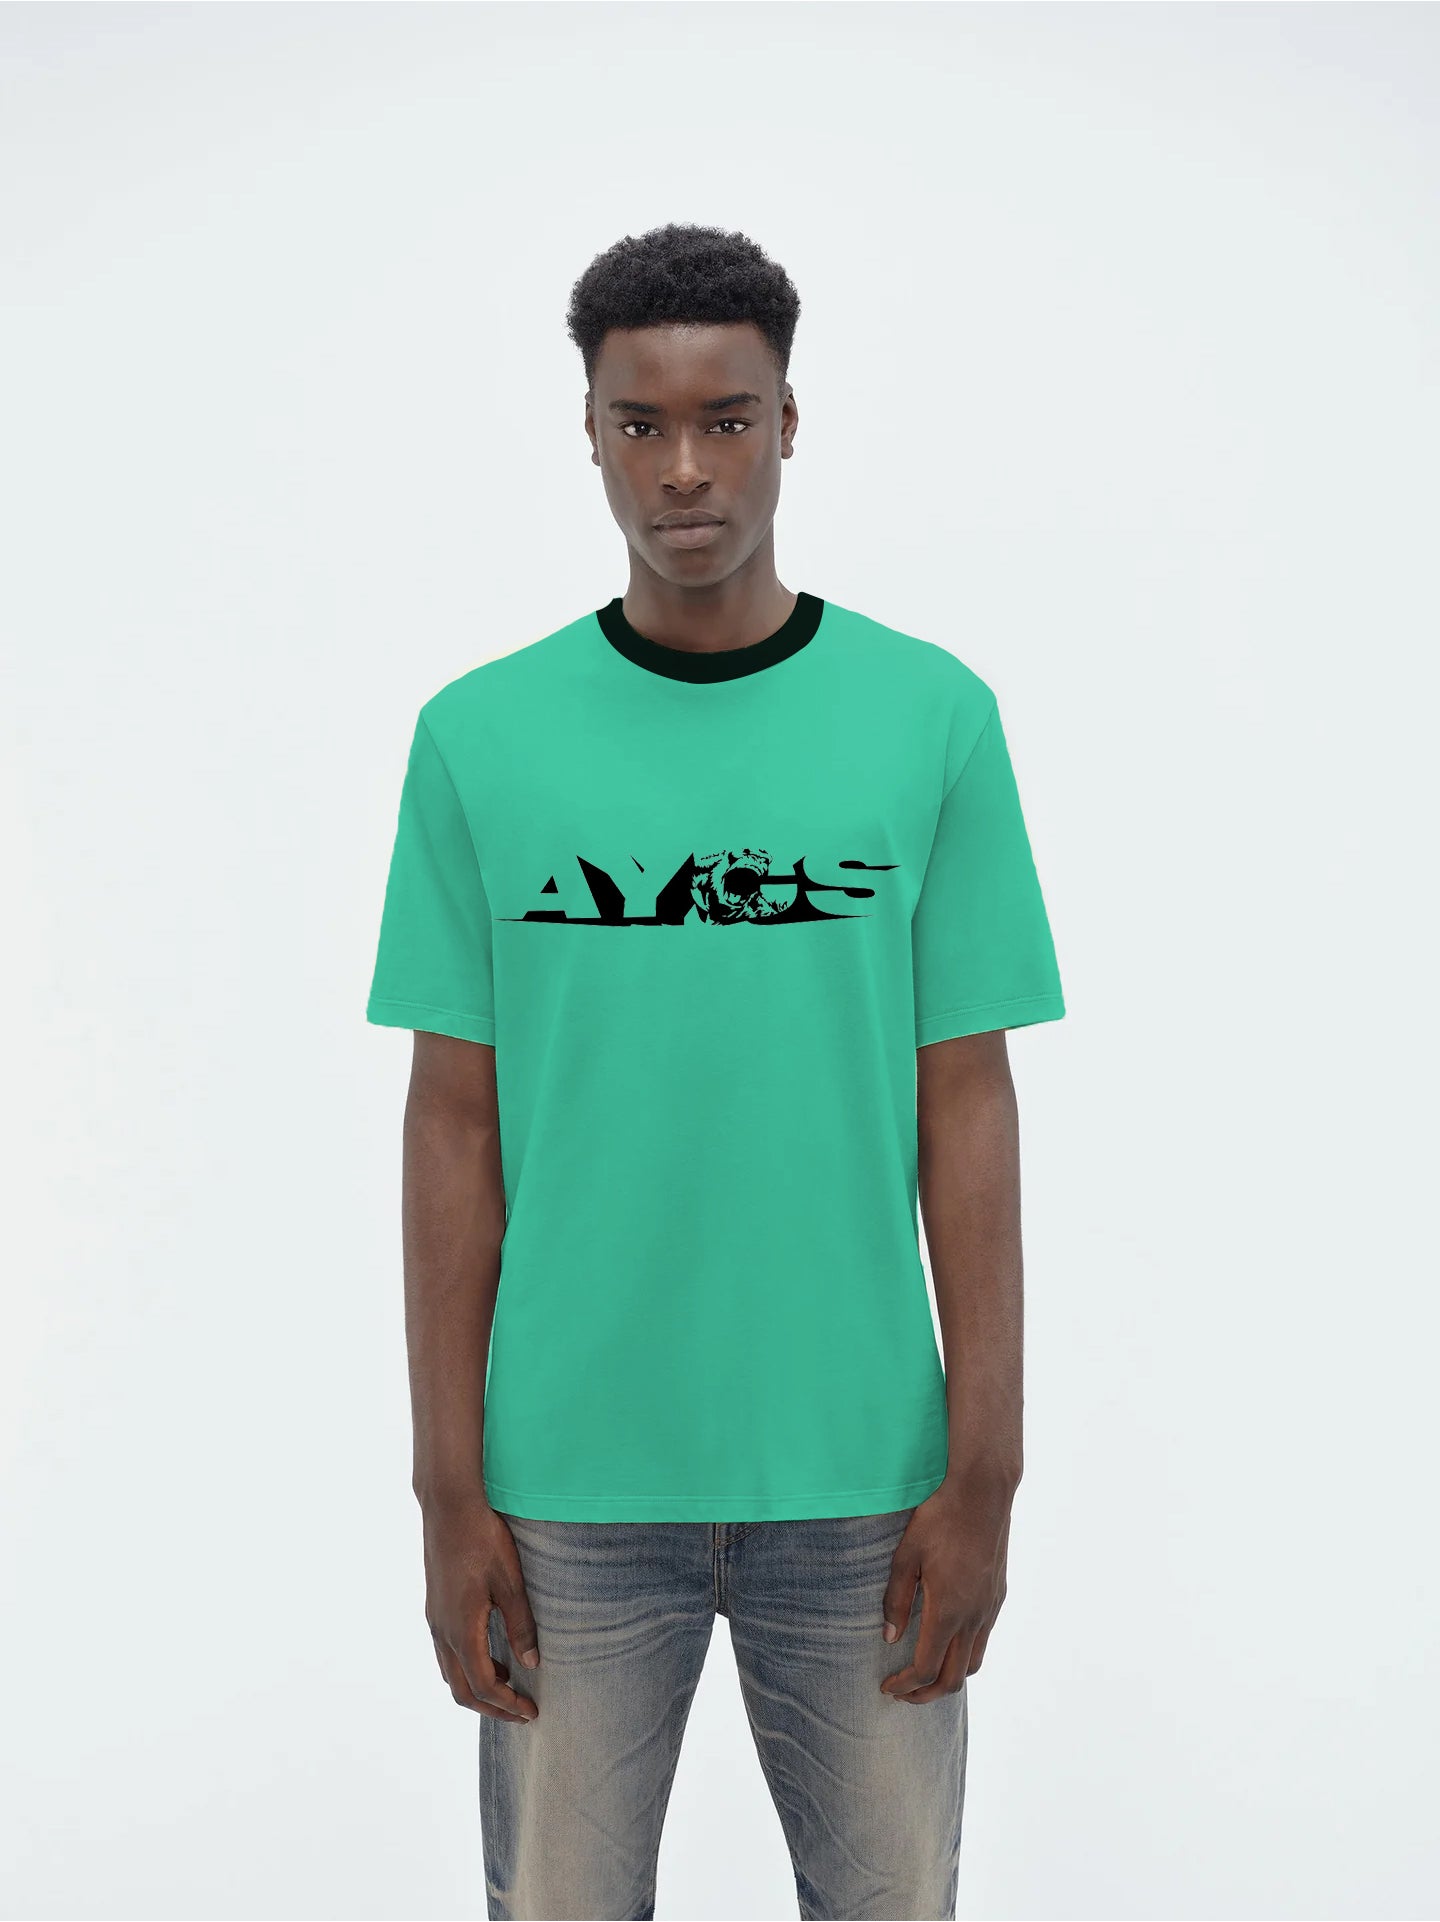 Kong Lives Oversized T-shirt (Green)- AYCS